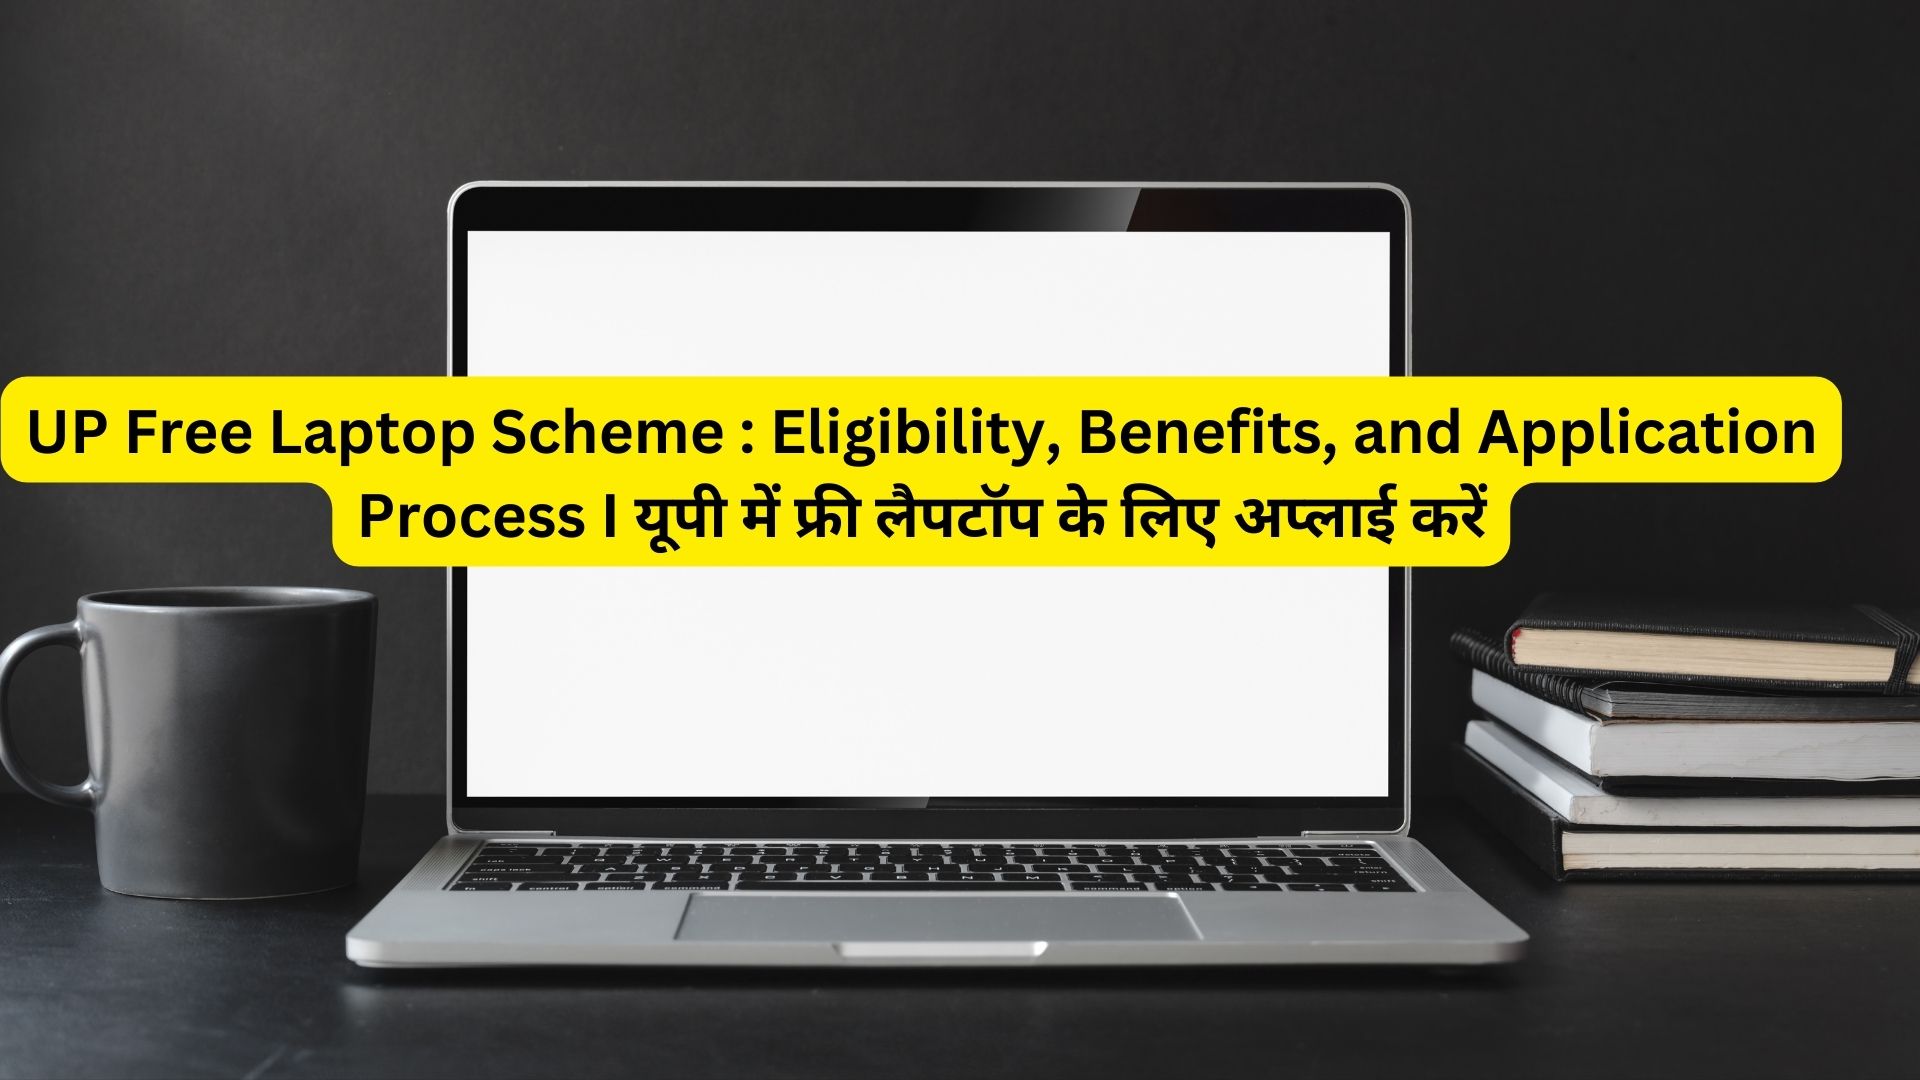 UP Free Laptop Scheme : Eligibility, Benefits, and Application Process I यूपी में फ्री लैपटॉप के लिए अप्लाई करें